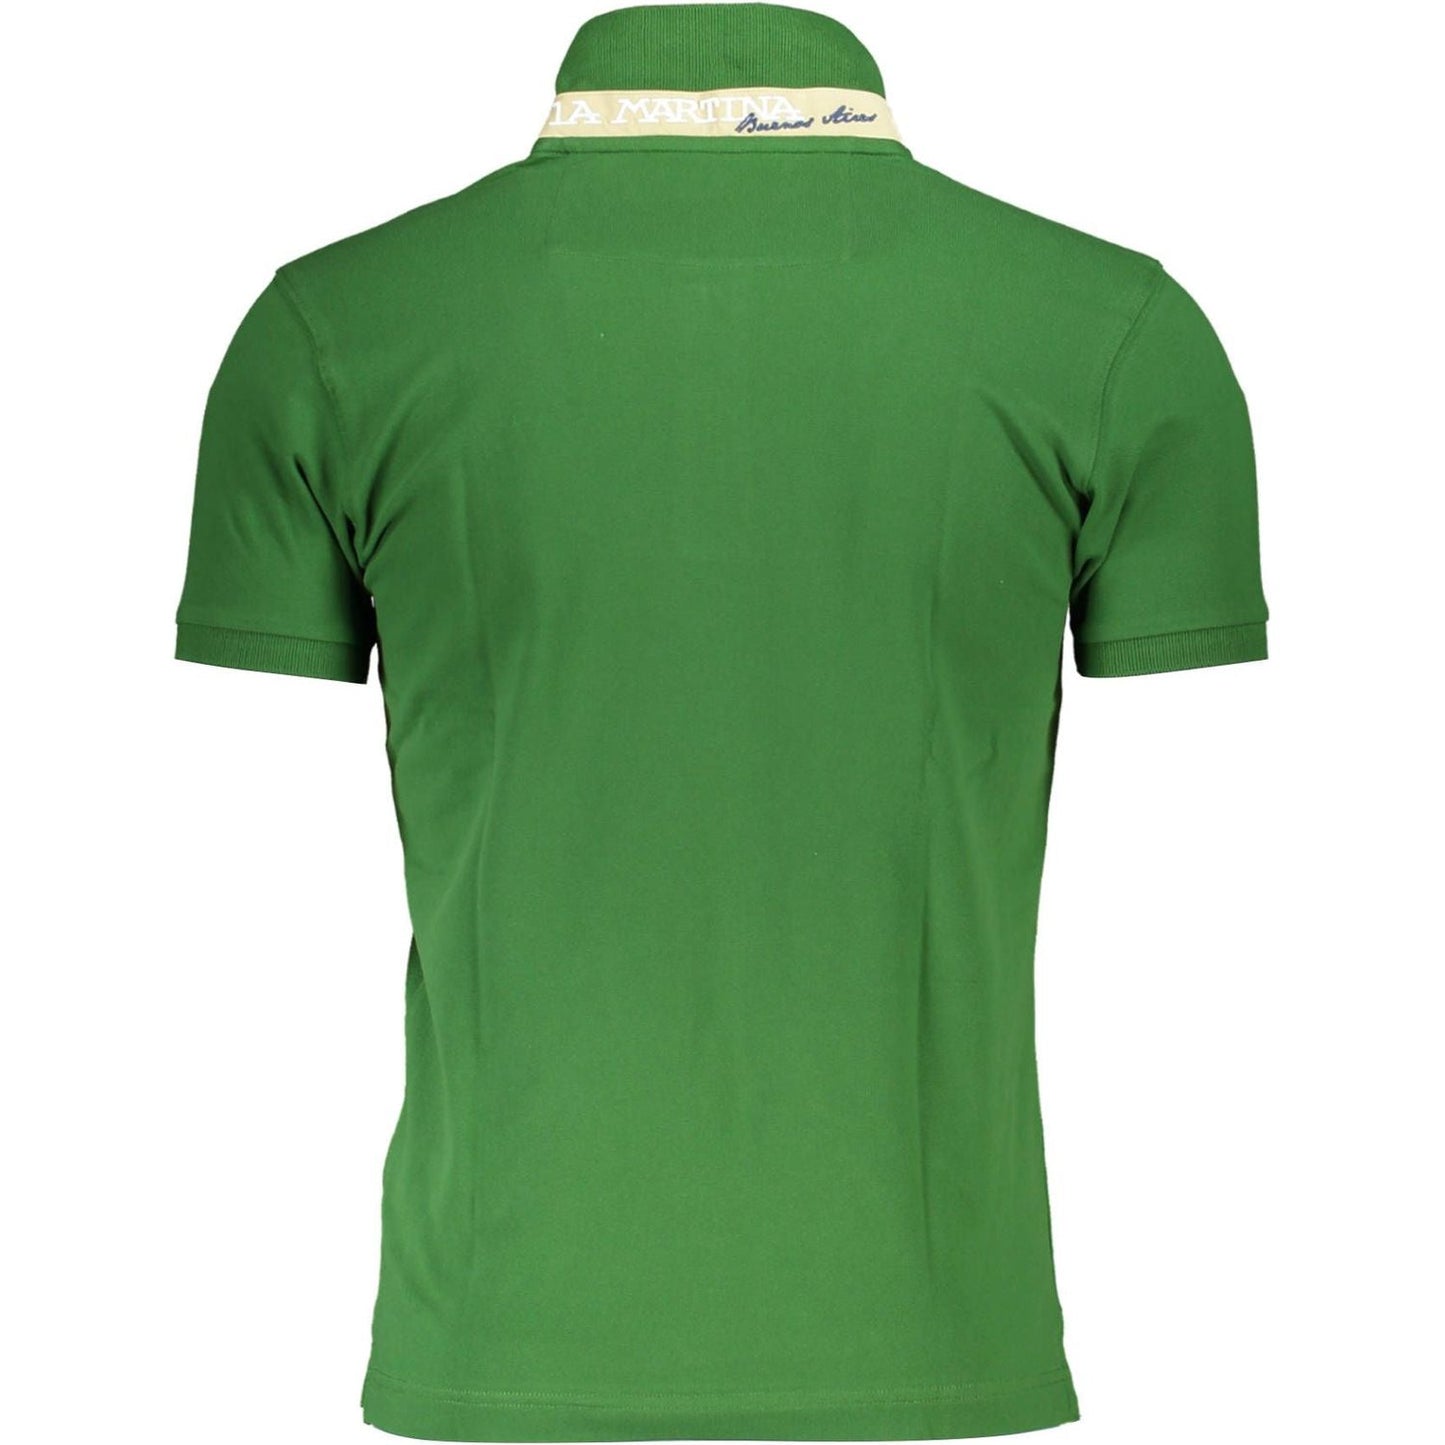 La Martina Elegant Slim Fit Green Polo With Contrasting Details elegant-slim-fit-green-polo-with-contrasting-details